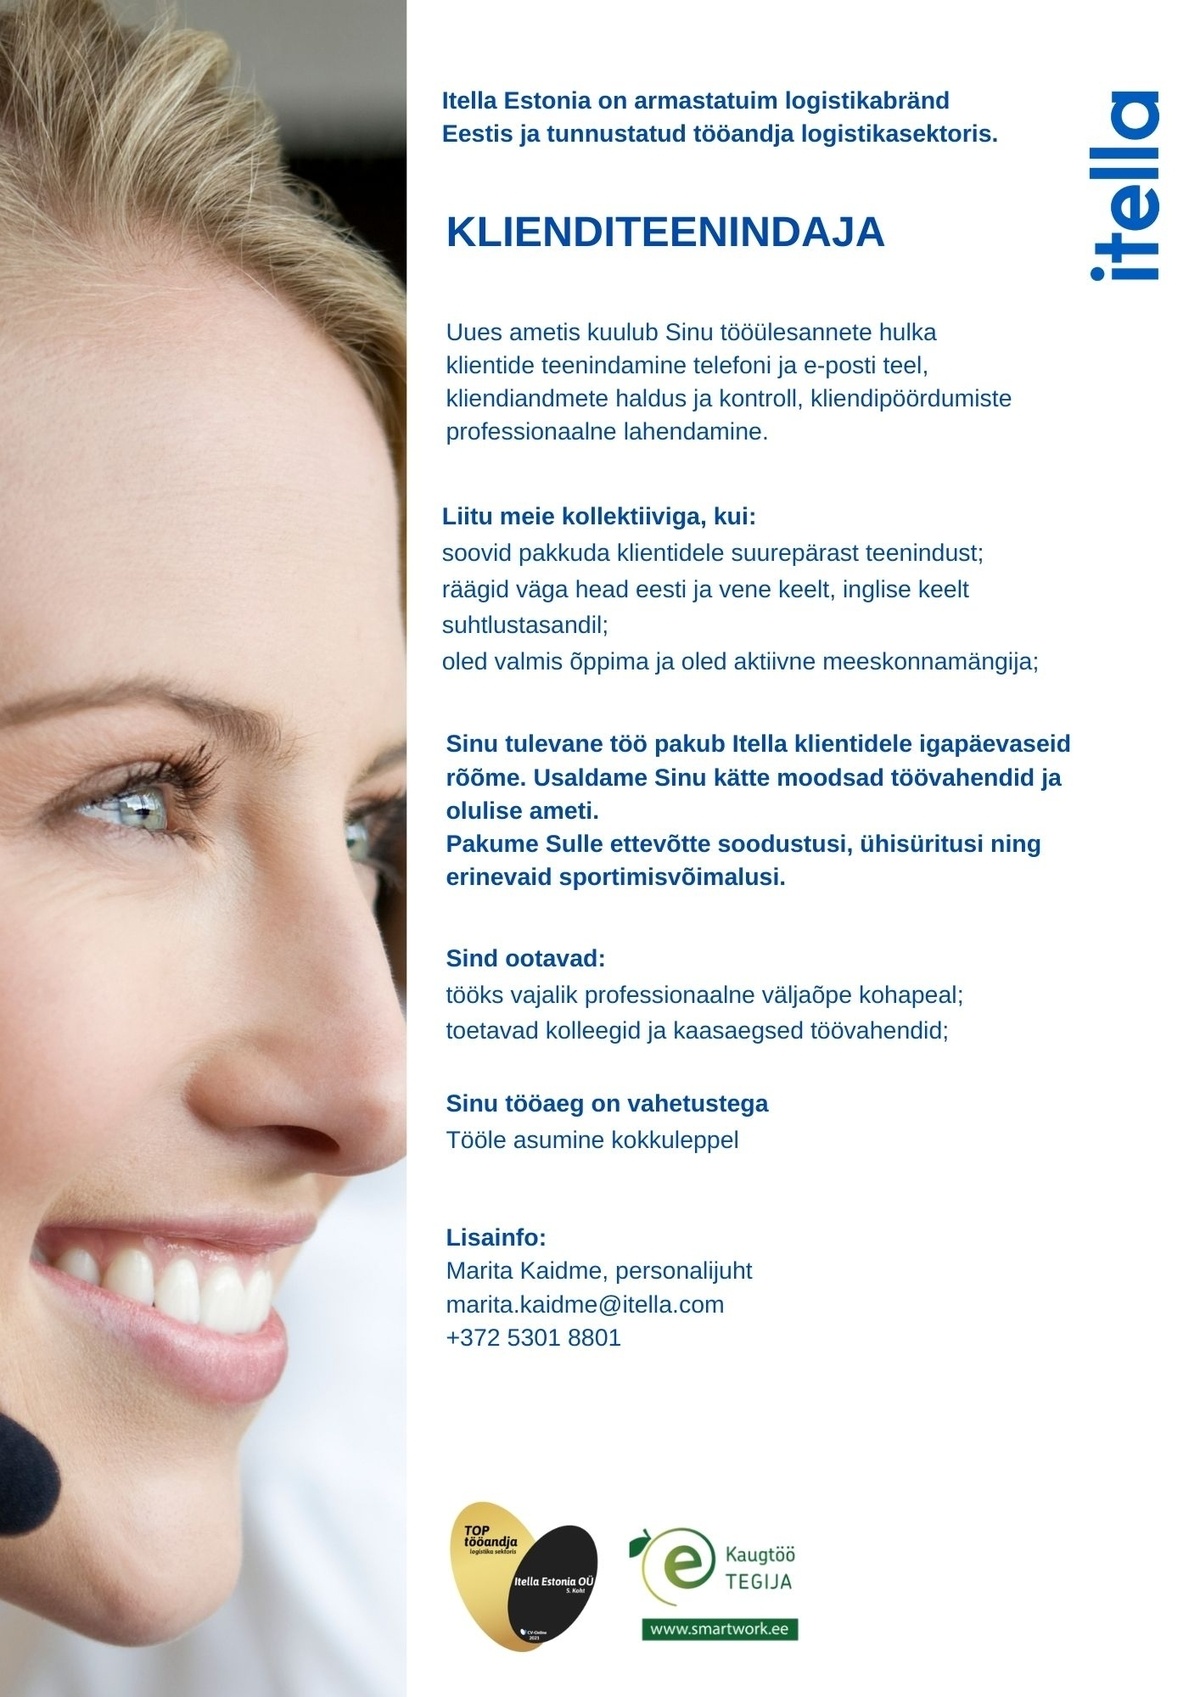 Itella Estonia OÜ Klienditeenindaja